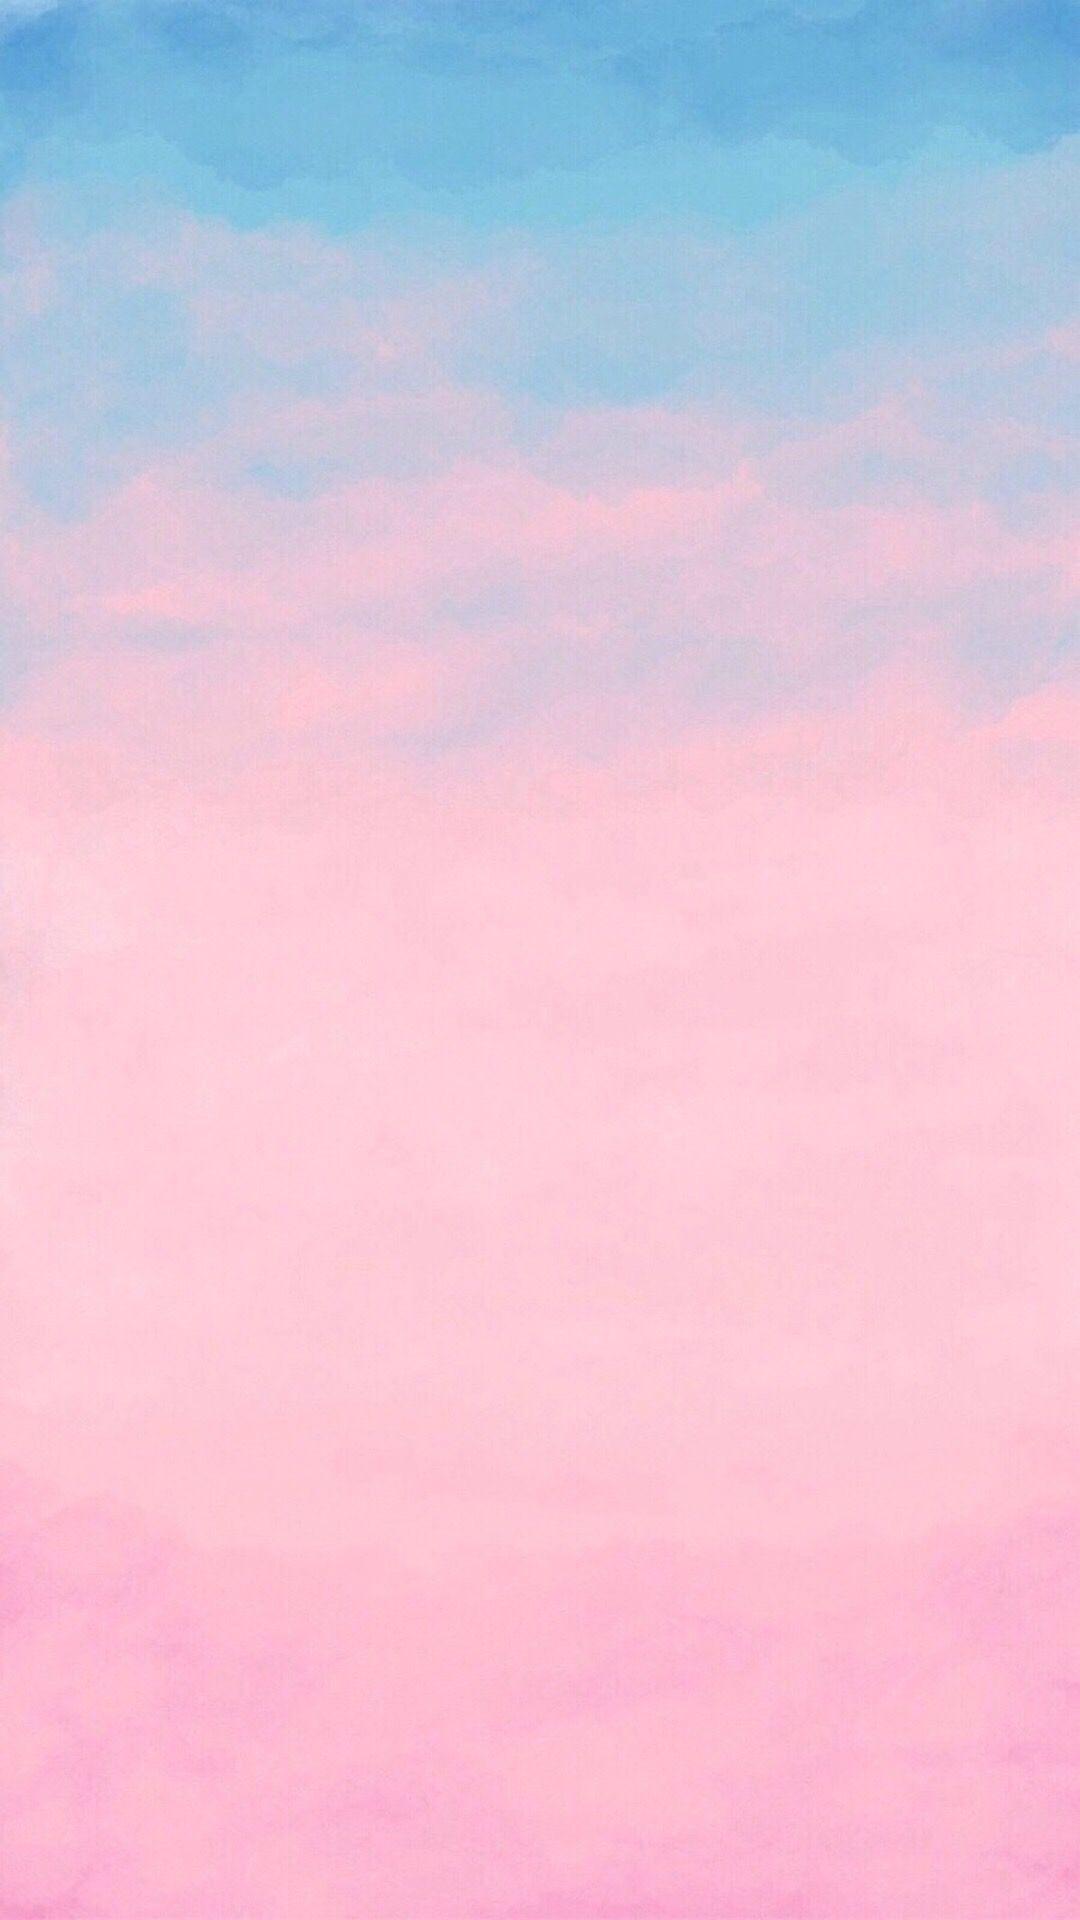 1080x1920 Nền màu hồng và xanh lam.  Fundos de cor sólida, Fundo de aquarela